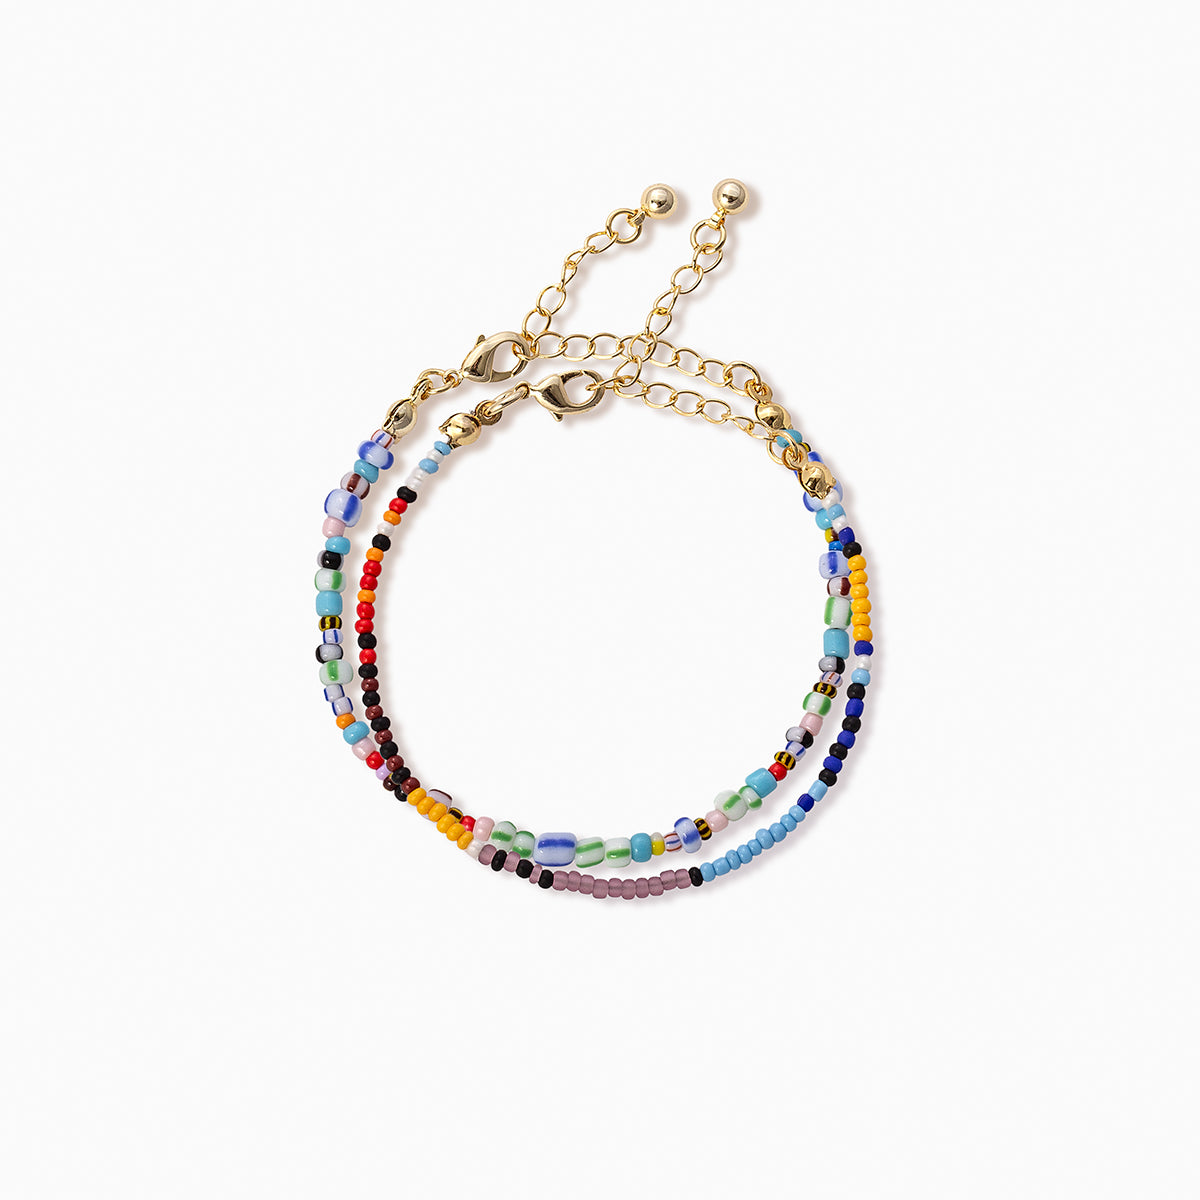 Beads Bracelet | Gold | Product Image | Uncommon James